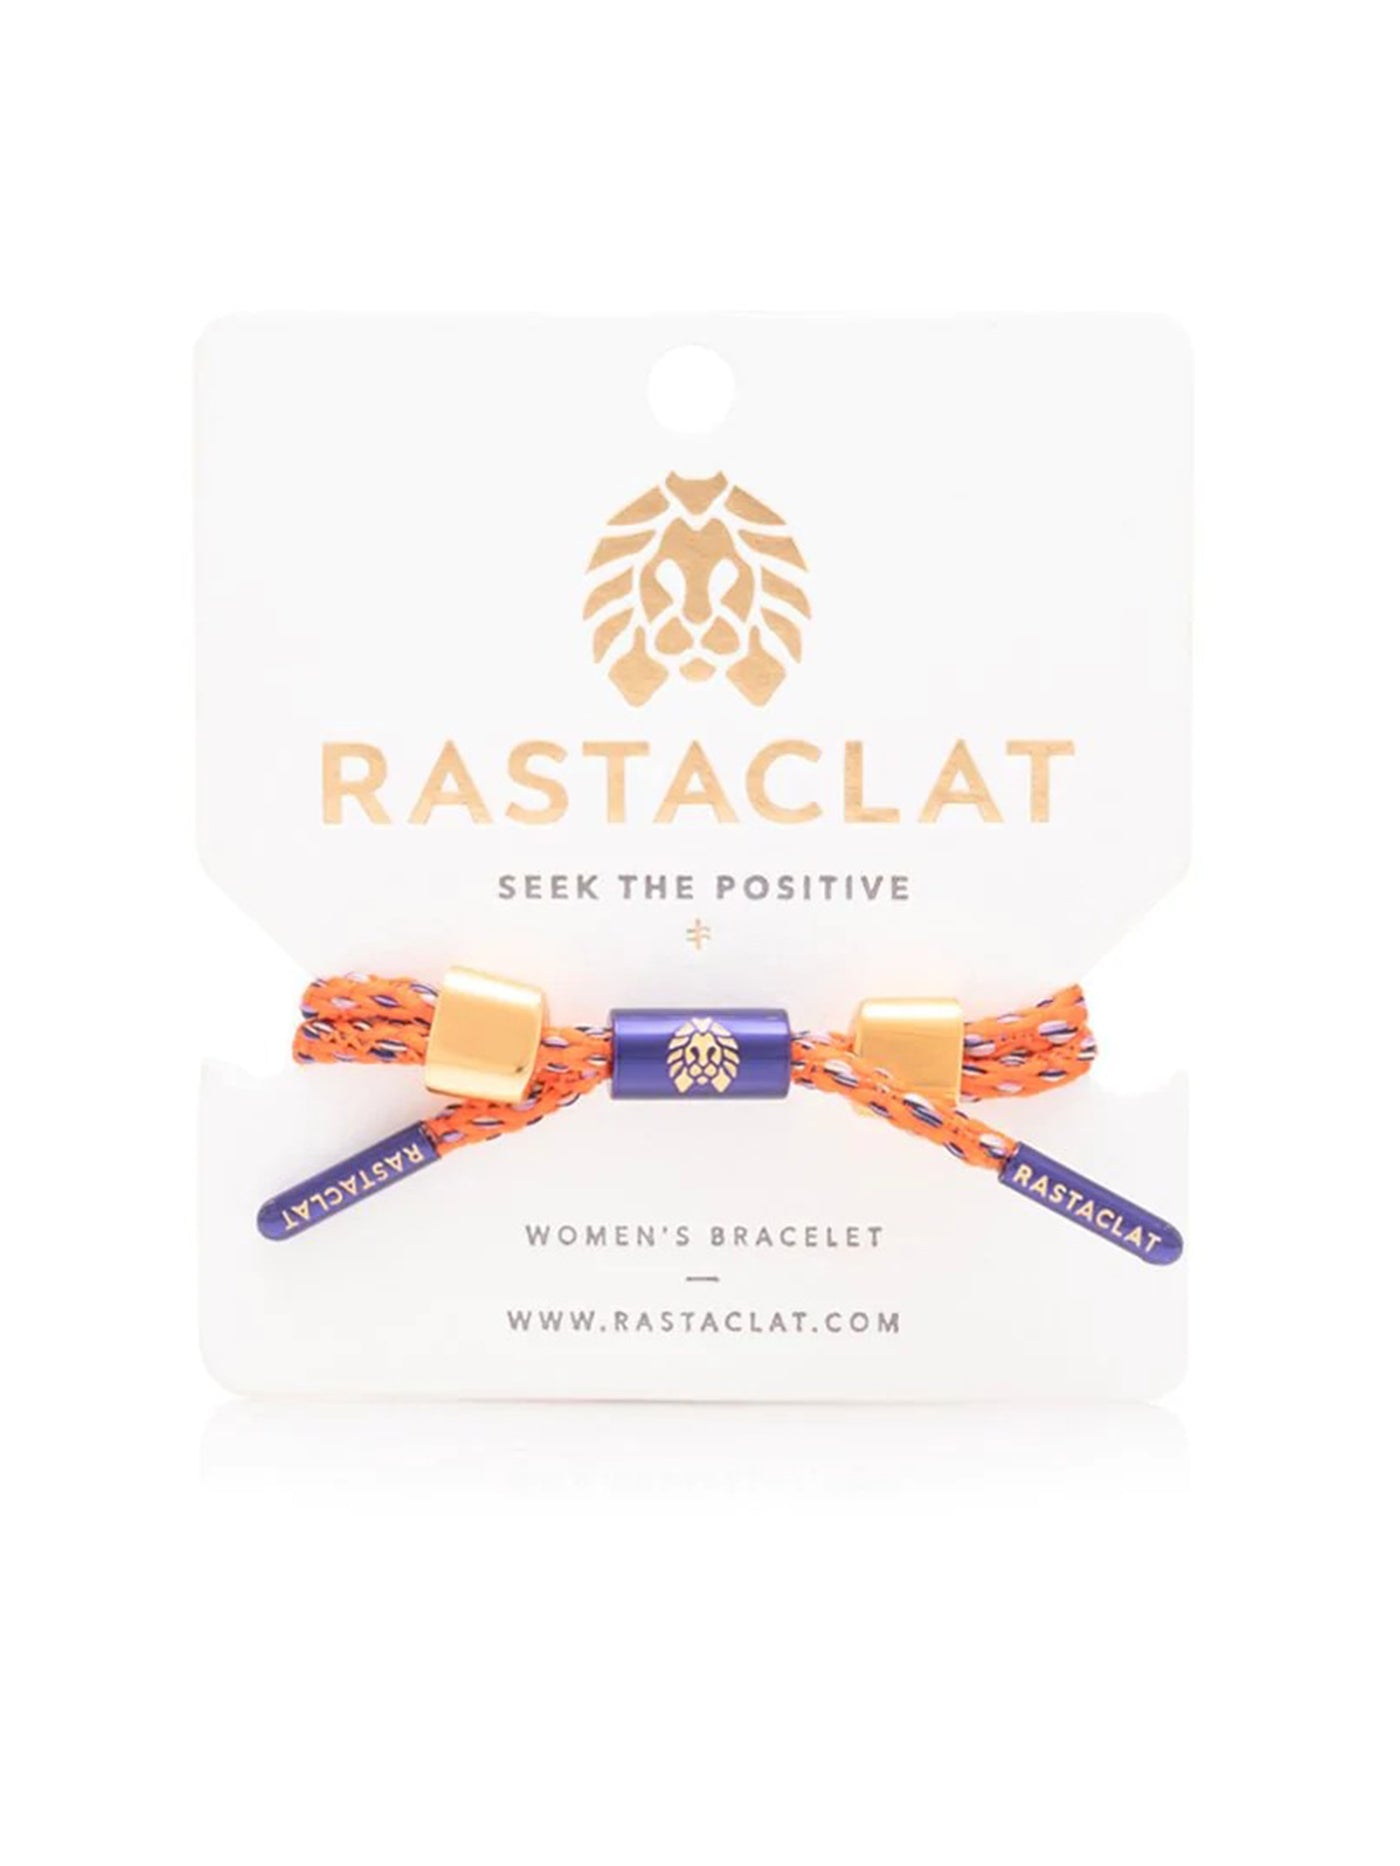 Rastaclat Knotaclat Bracelet